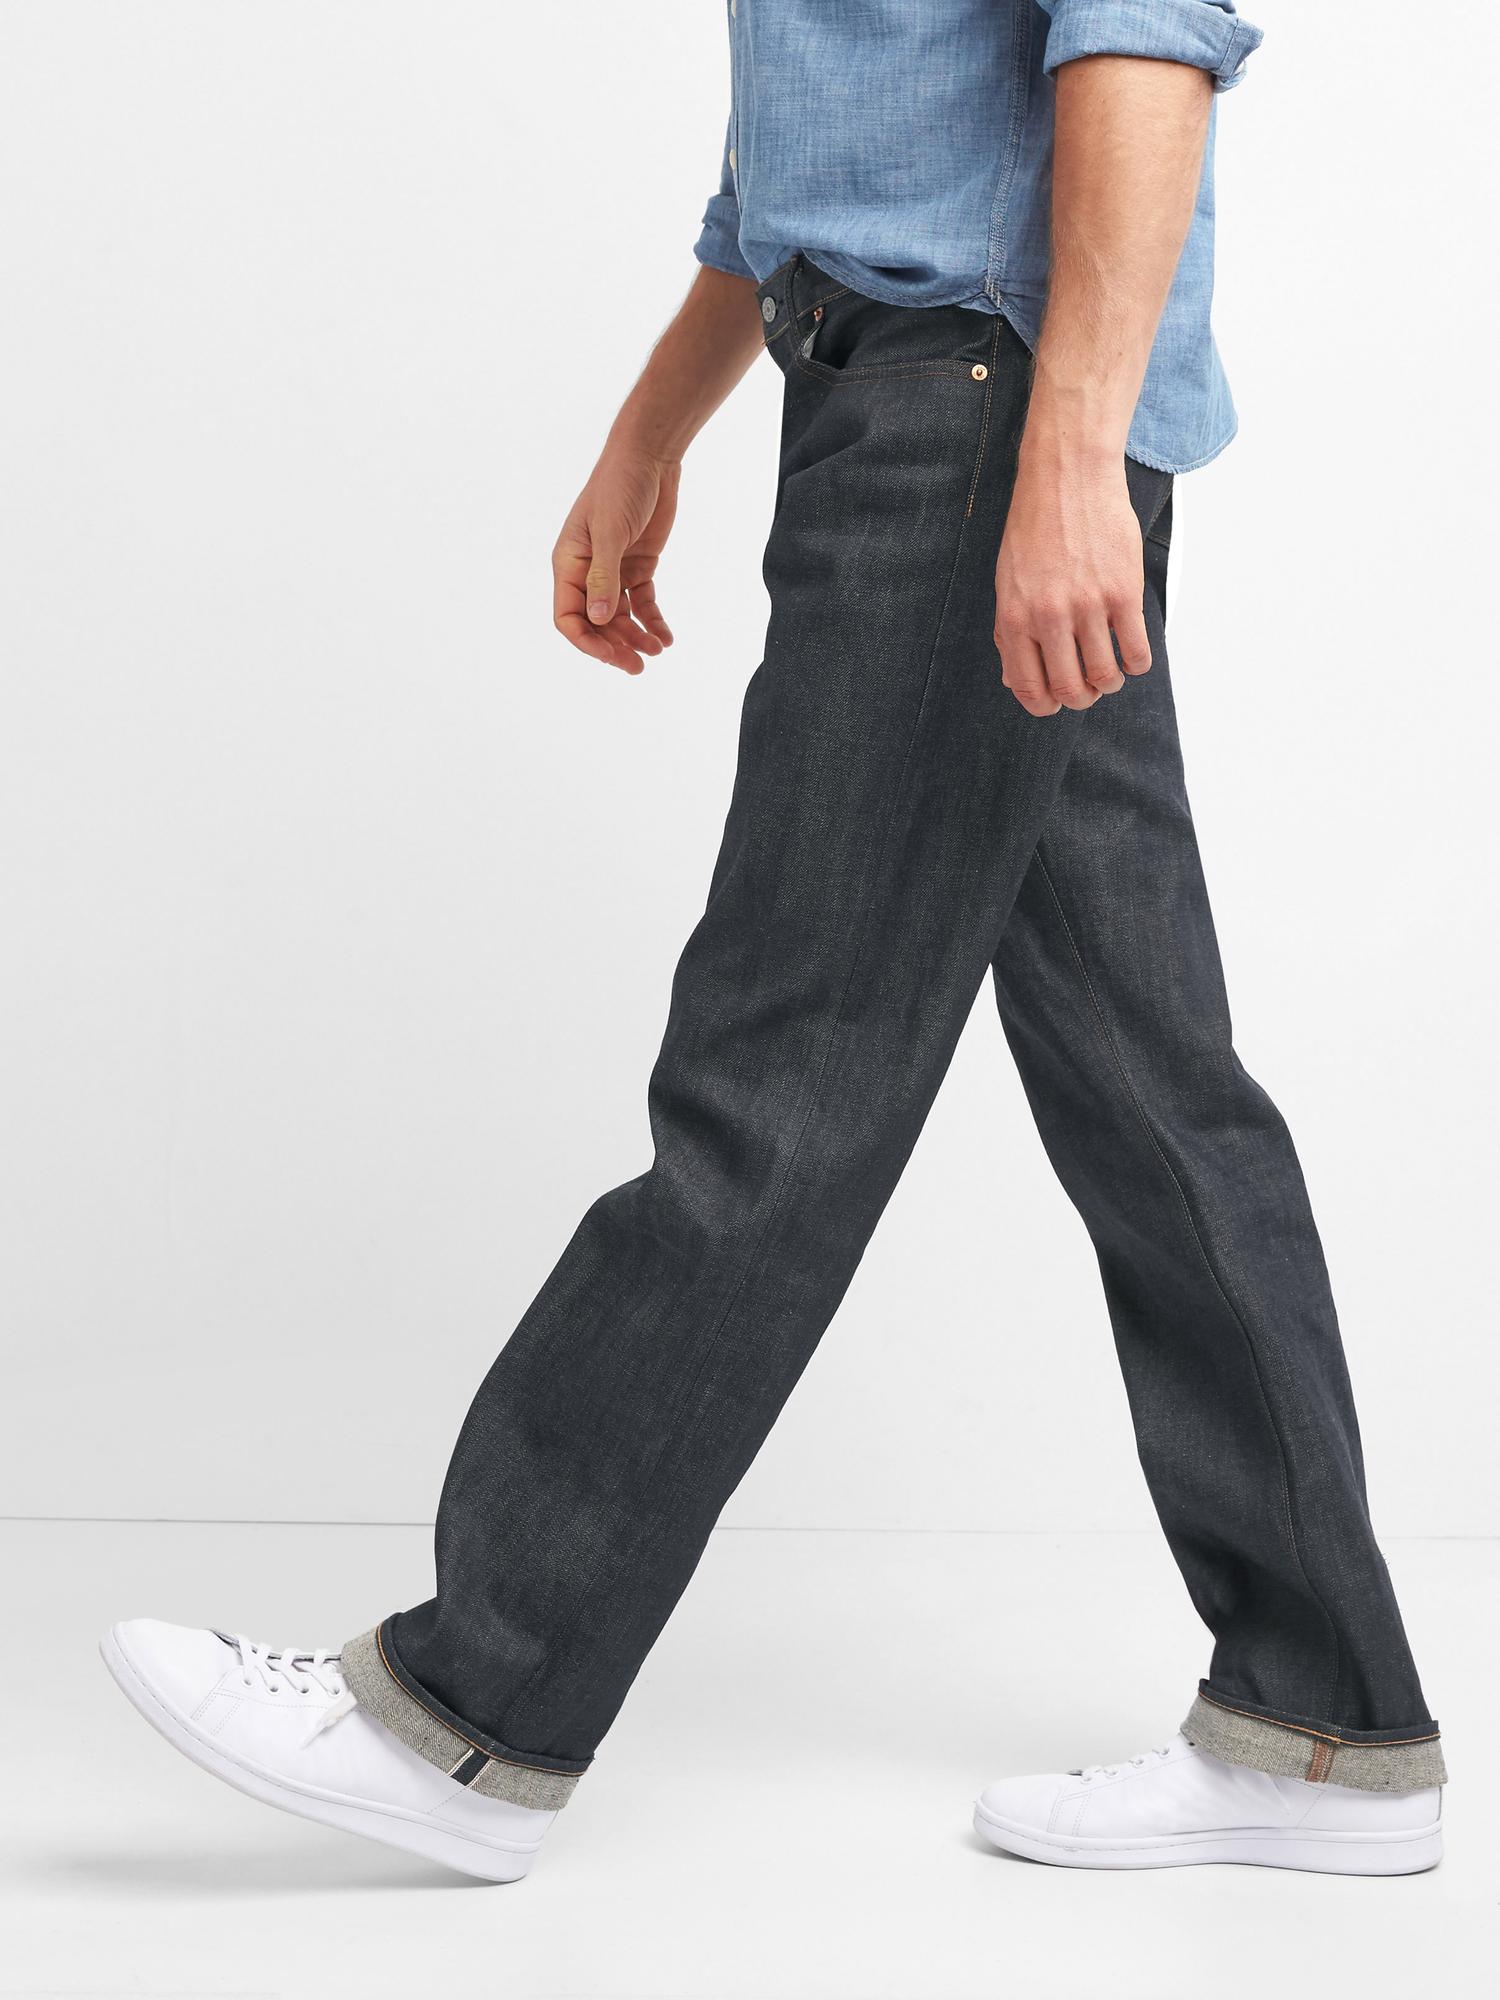 gap mens selvedge jeans